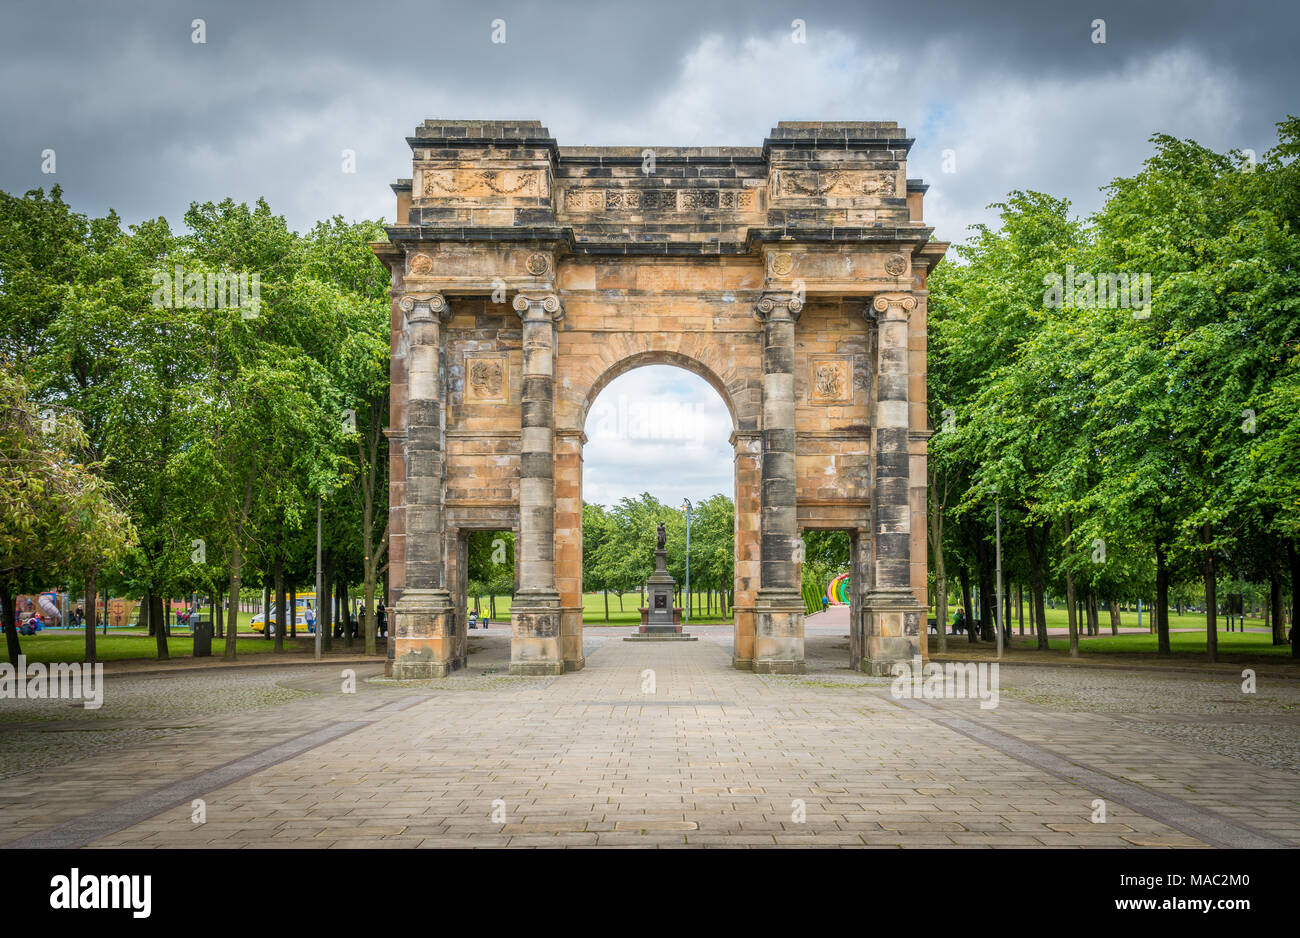 McLennan Arch in Glasgow green park, Scotland. Stock Photo